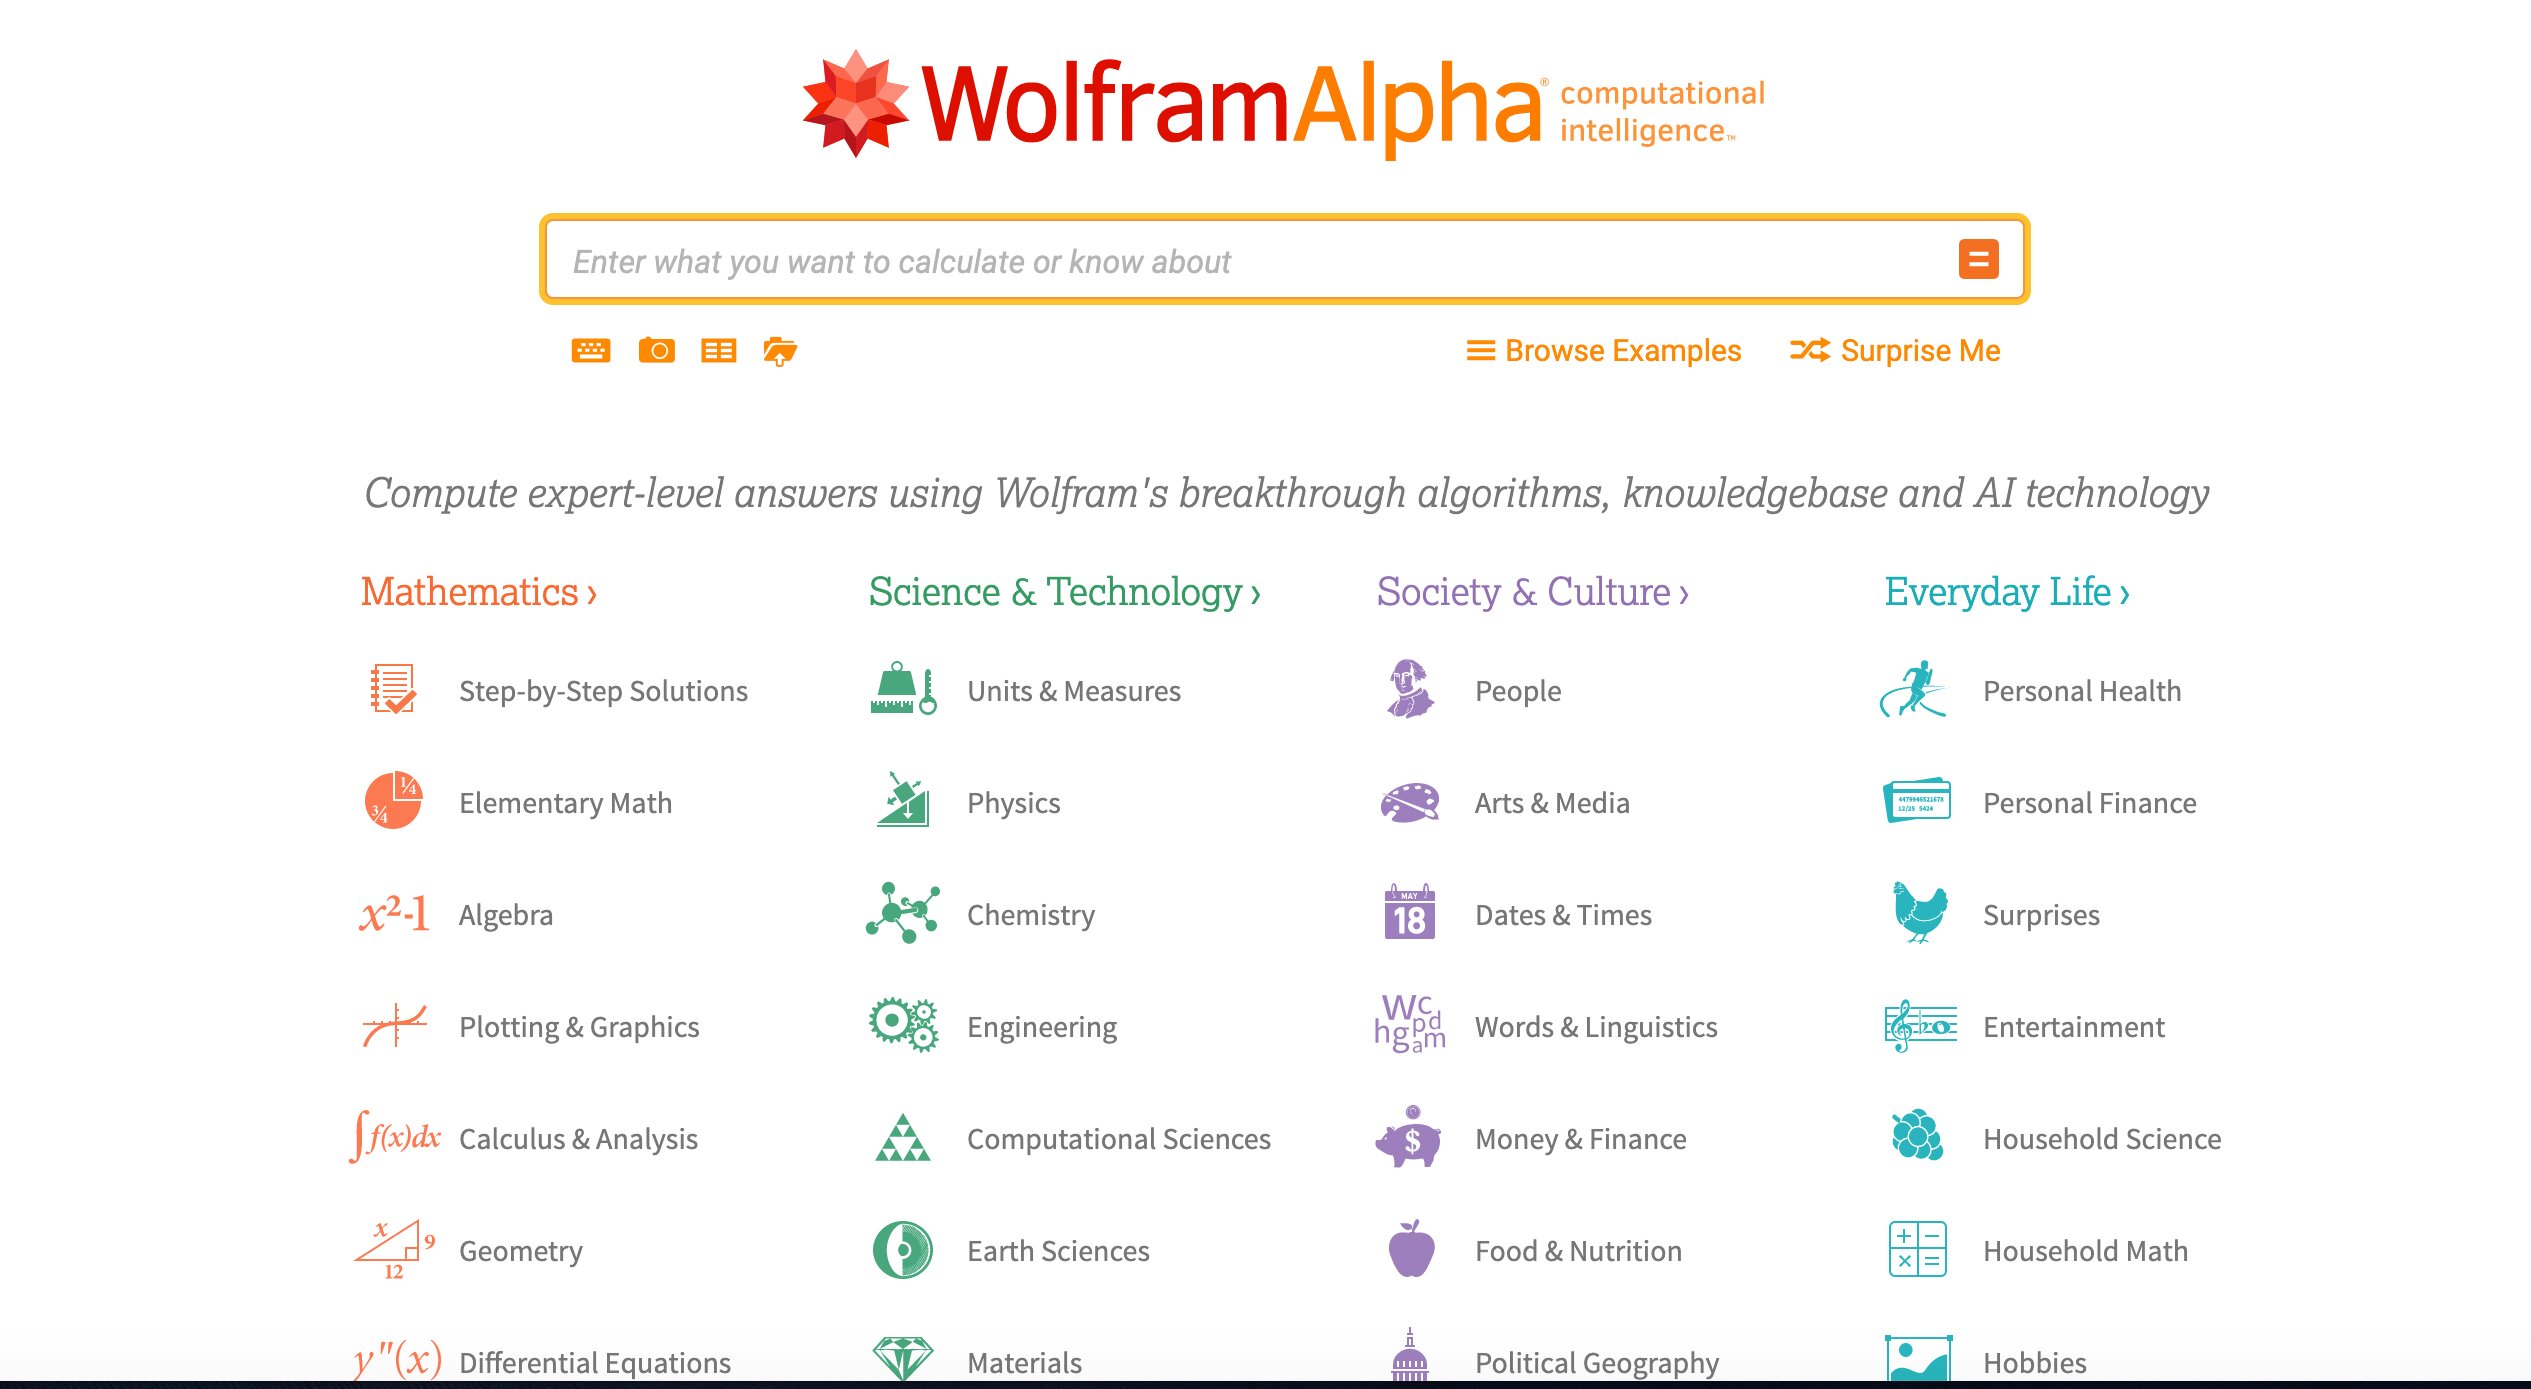 Www alphas ru. Wolfram Alpha. Поисковая система WOLFRAMALPHA. Wolfram Alpha Поисковик. Wolfram Alpha экспертная система.